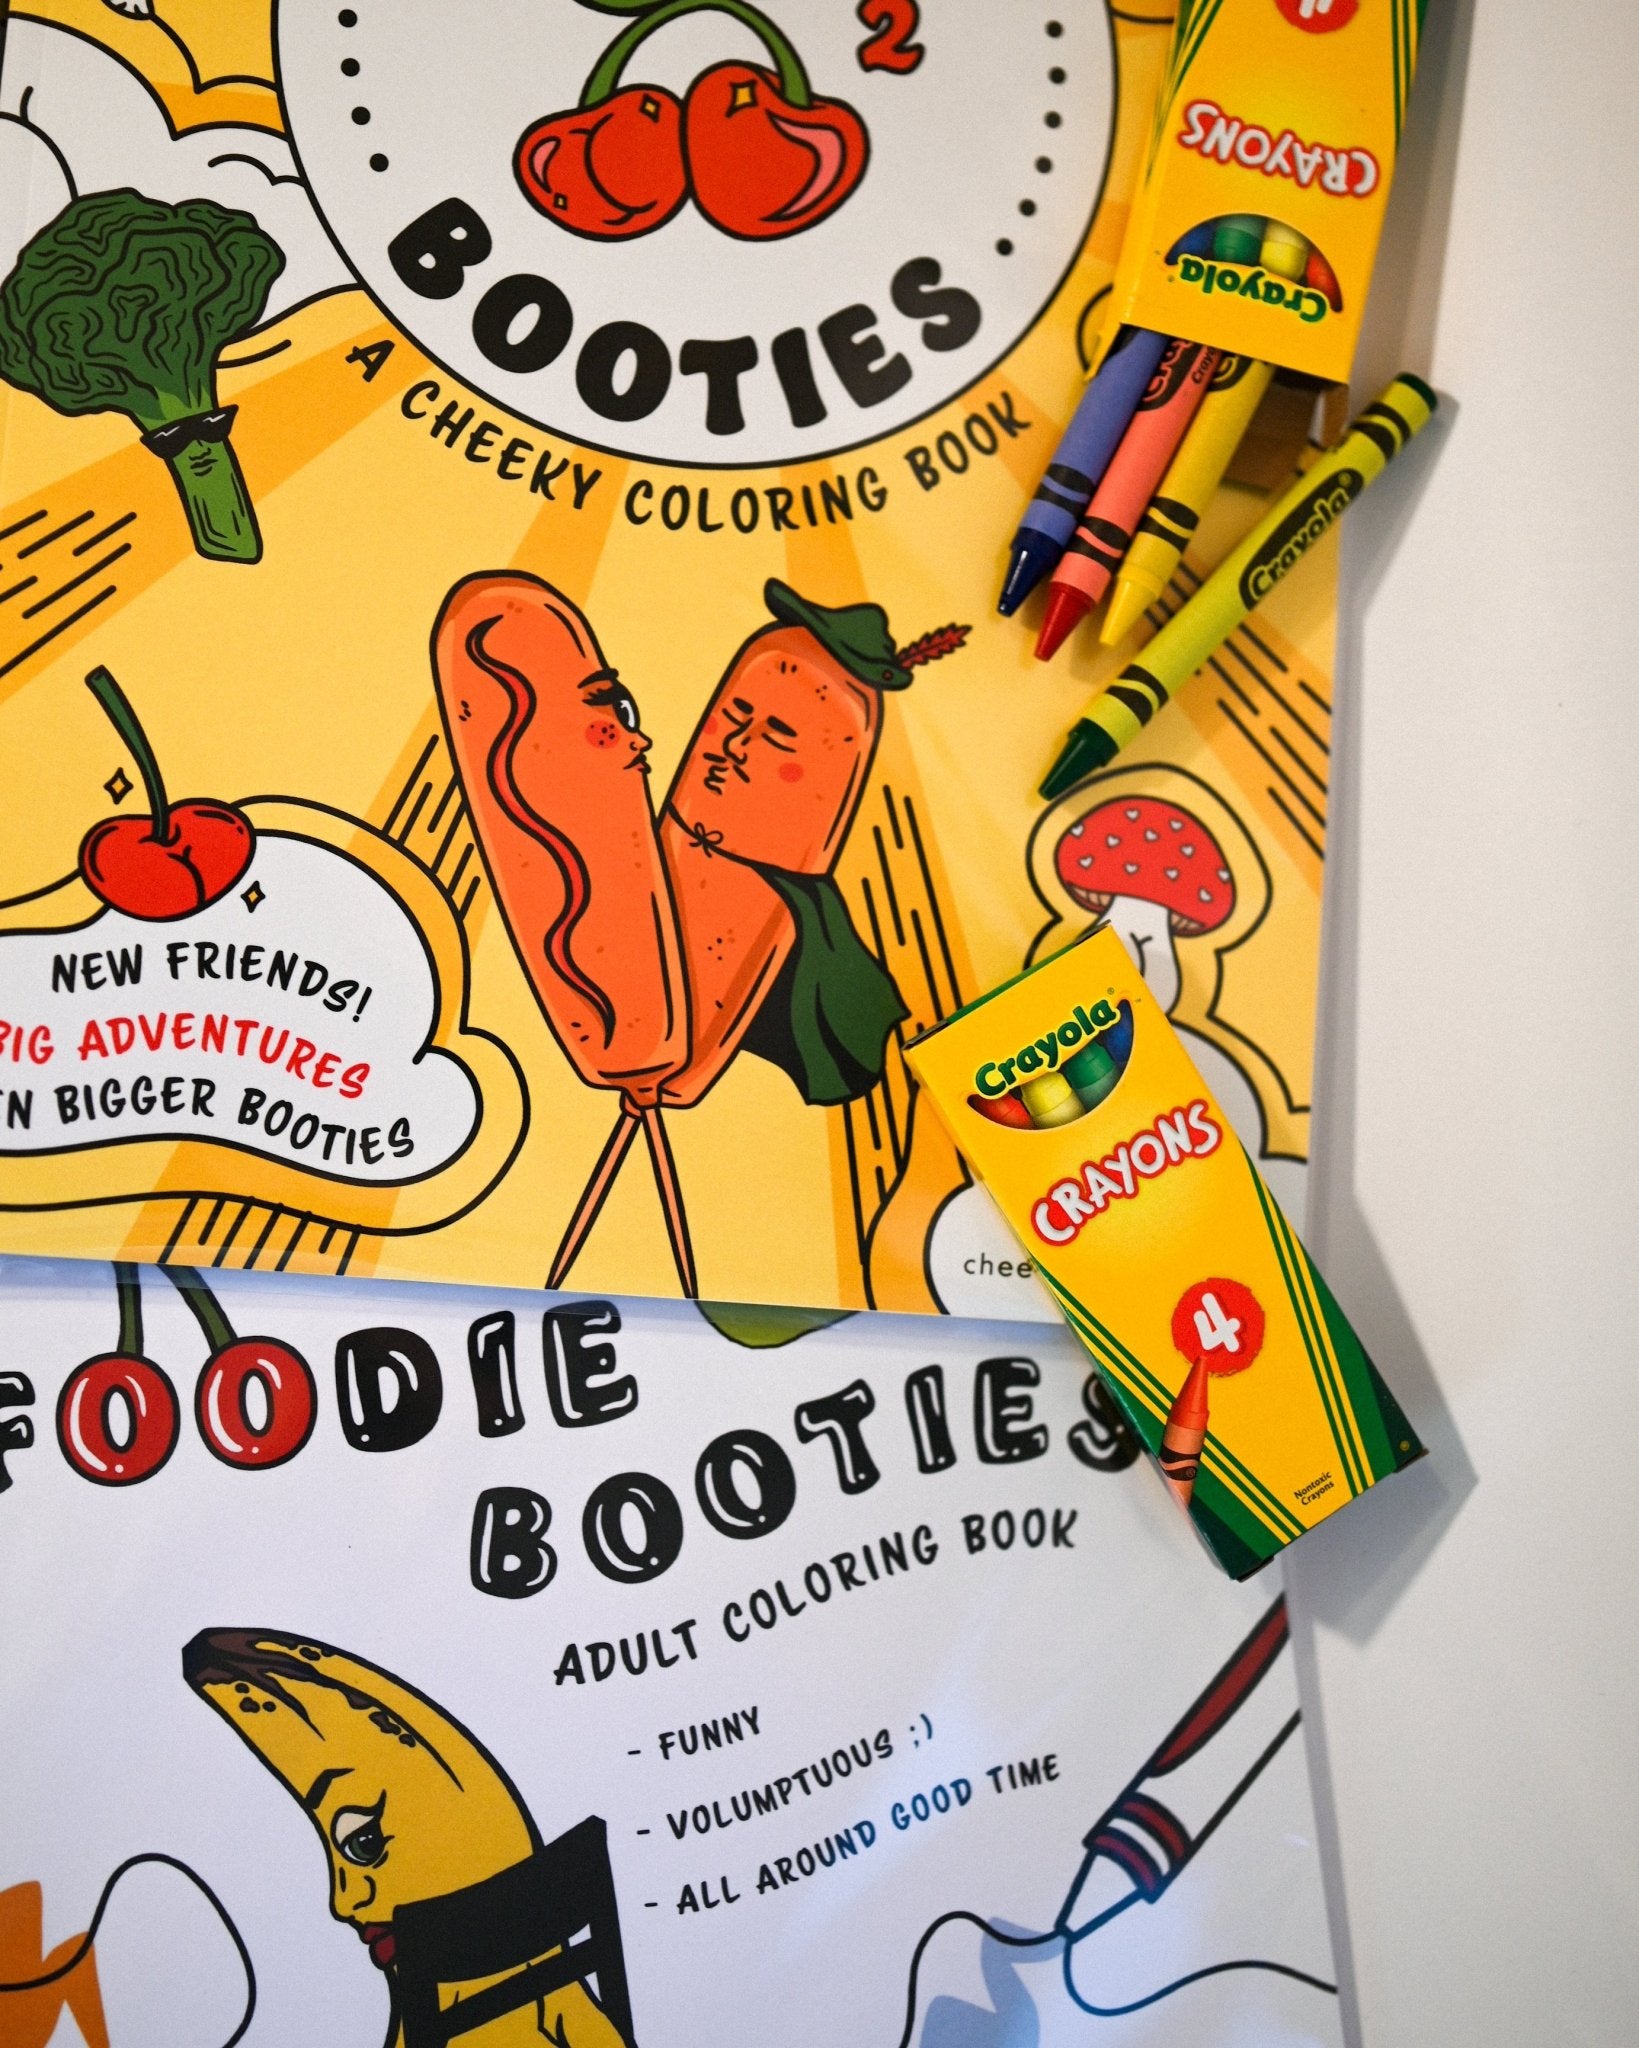 Foodie Booties 2: A Cheeky Coloring Book - Cheeky Art Studio-allison thompson-allisthompson-Apple